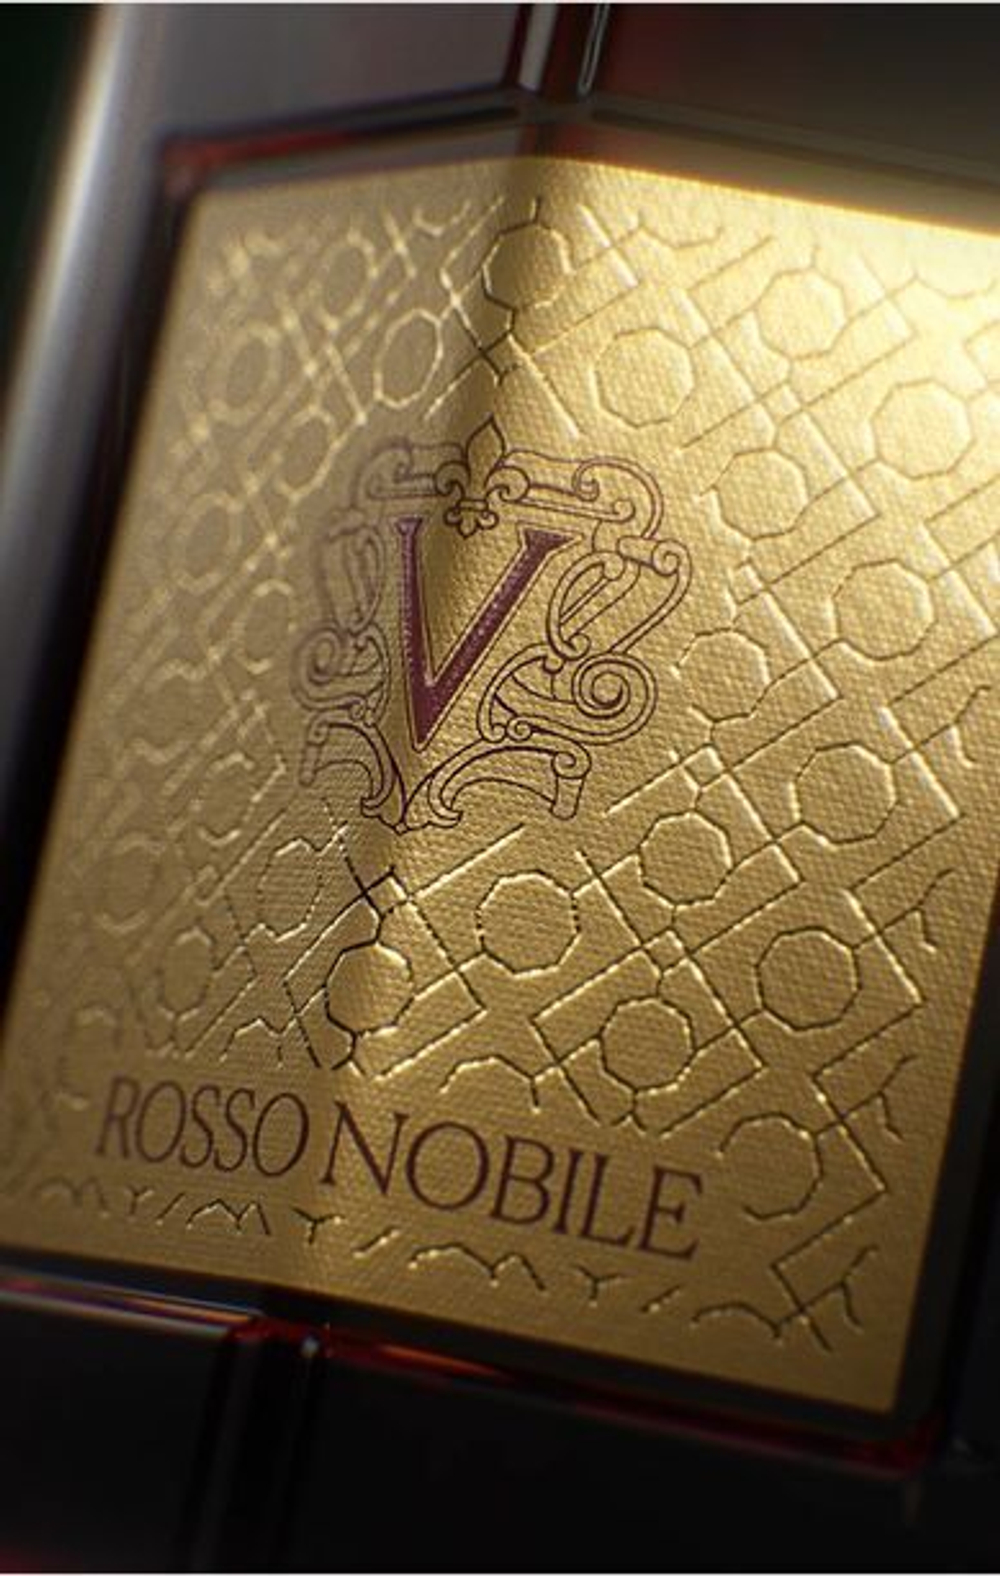 Rosso Nobile 40th Anniversary Limited Edition зеленая подарочная упаковка (юбилейный)